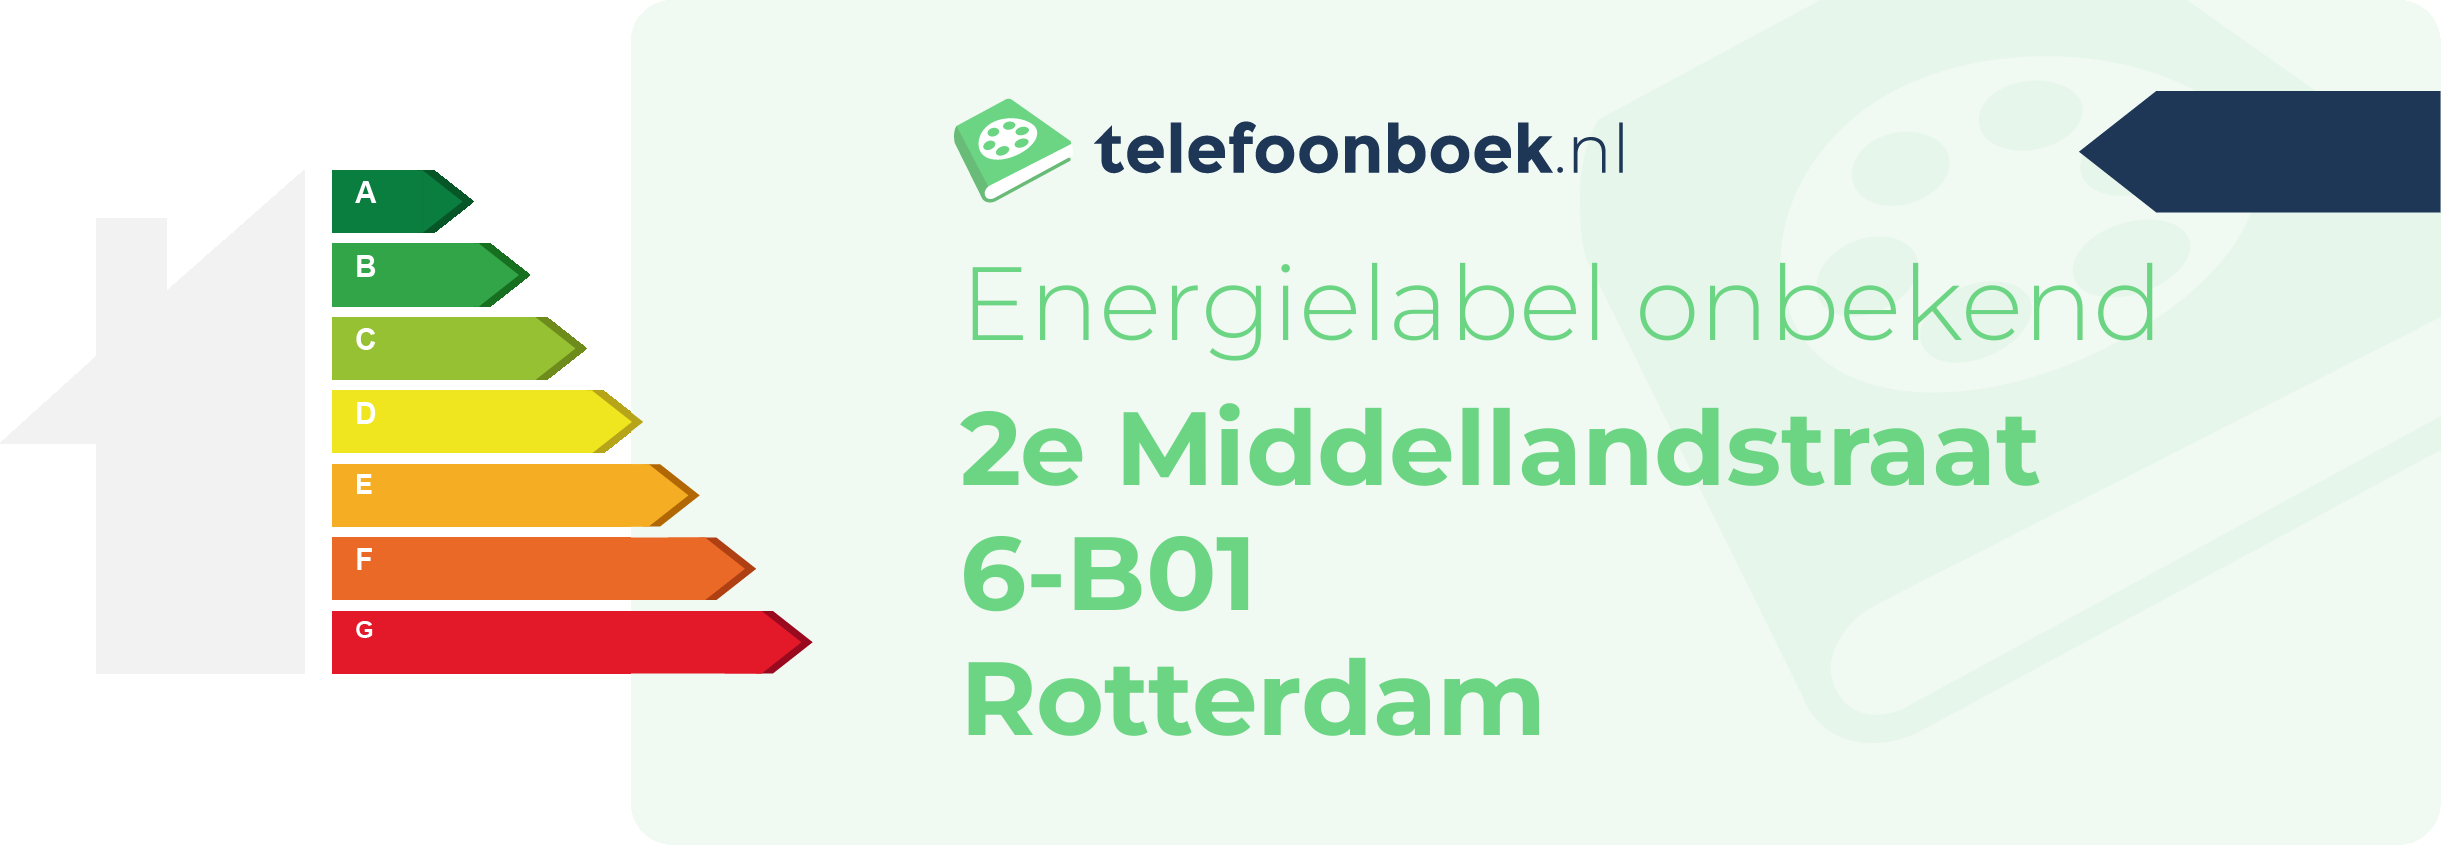 Energielabel 2e Middellandstraat 6-B01 Rotterdam